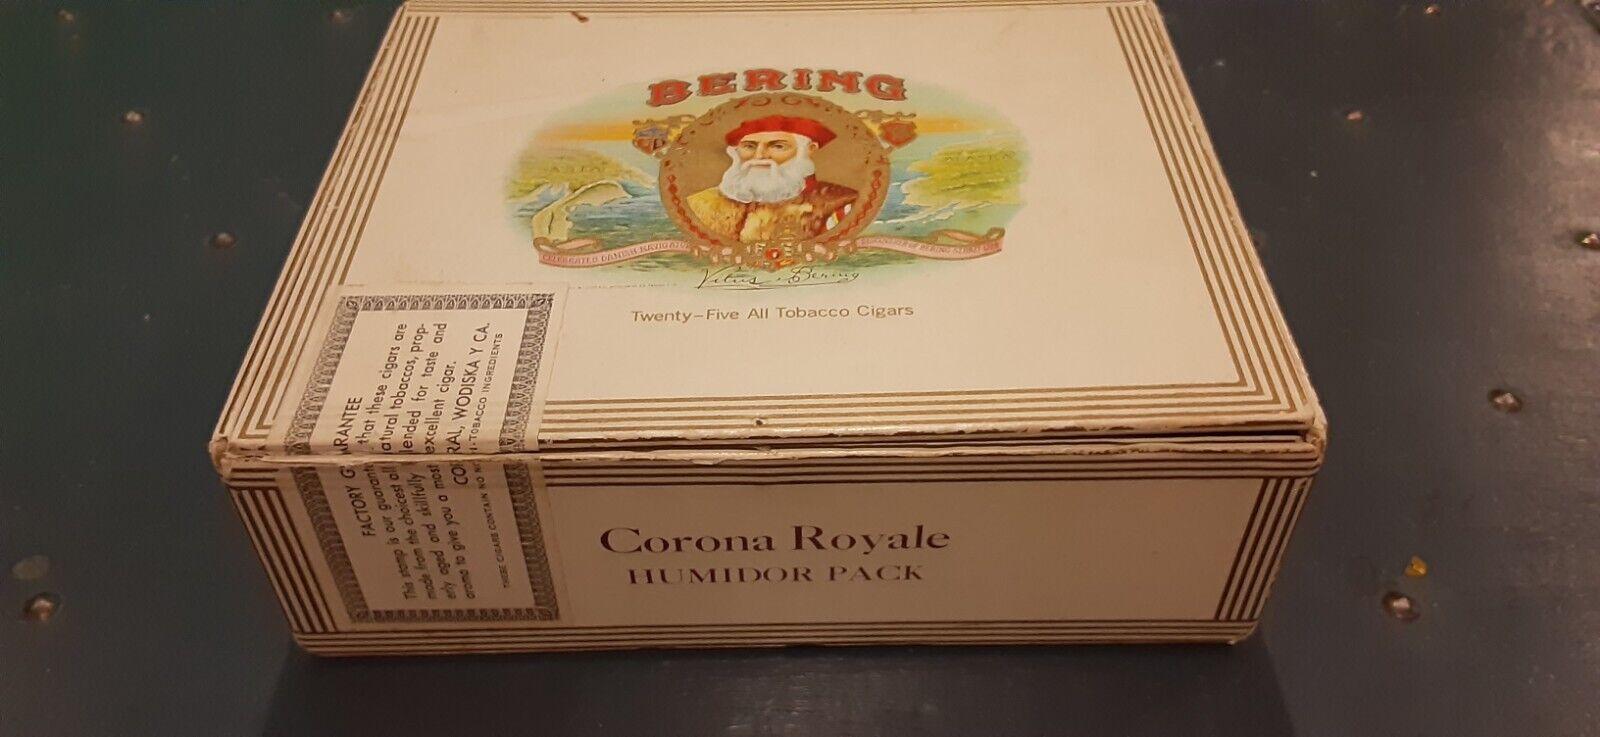 Bering Corona Royale Humidor Pack